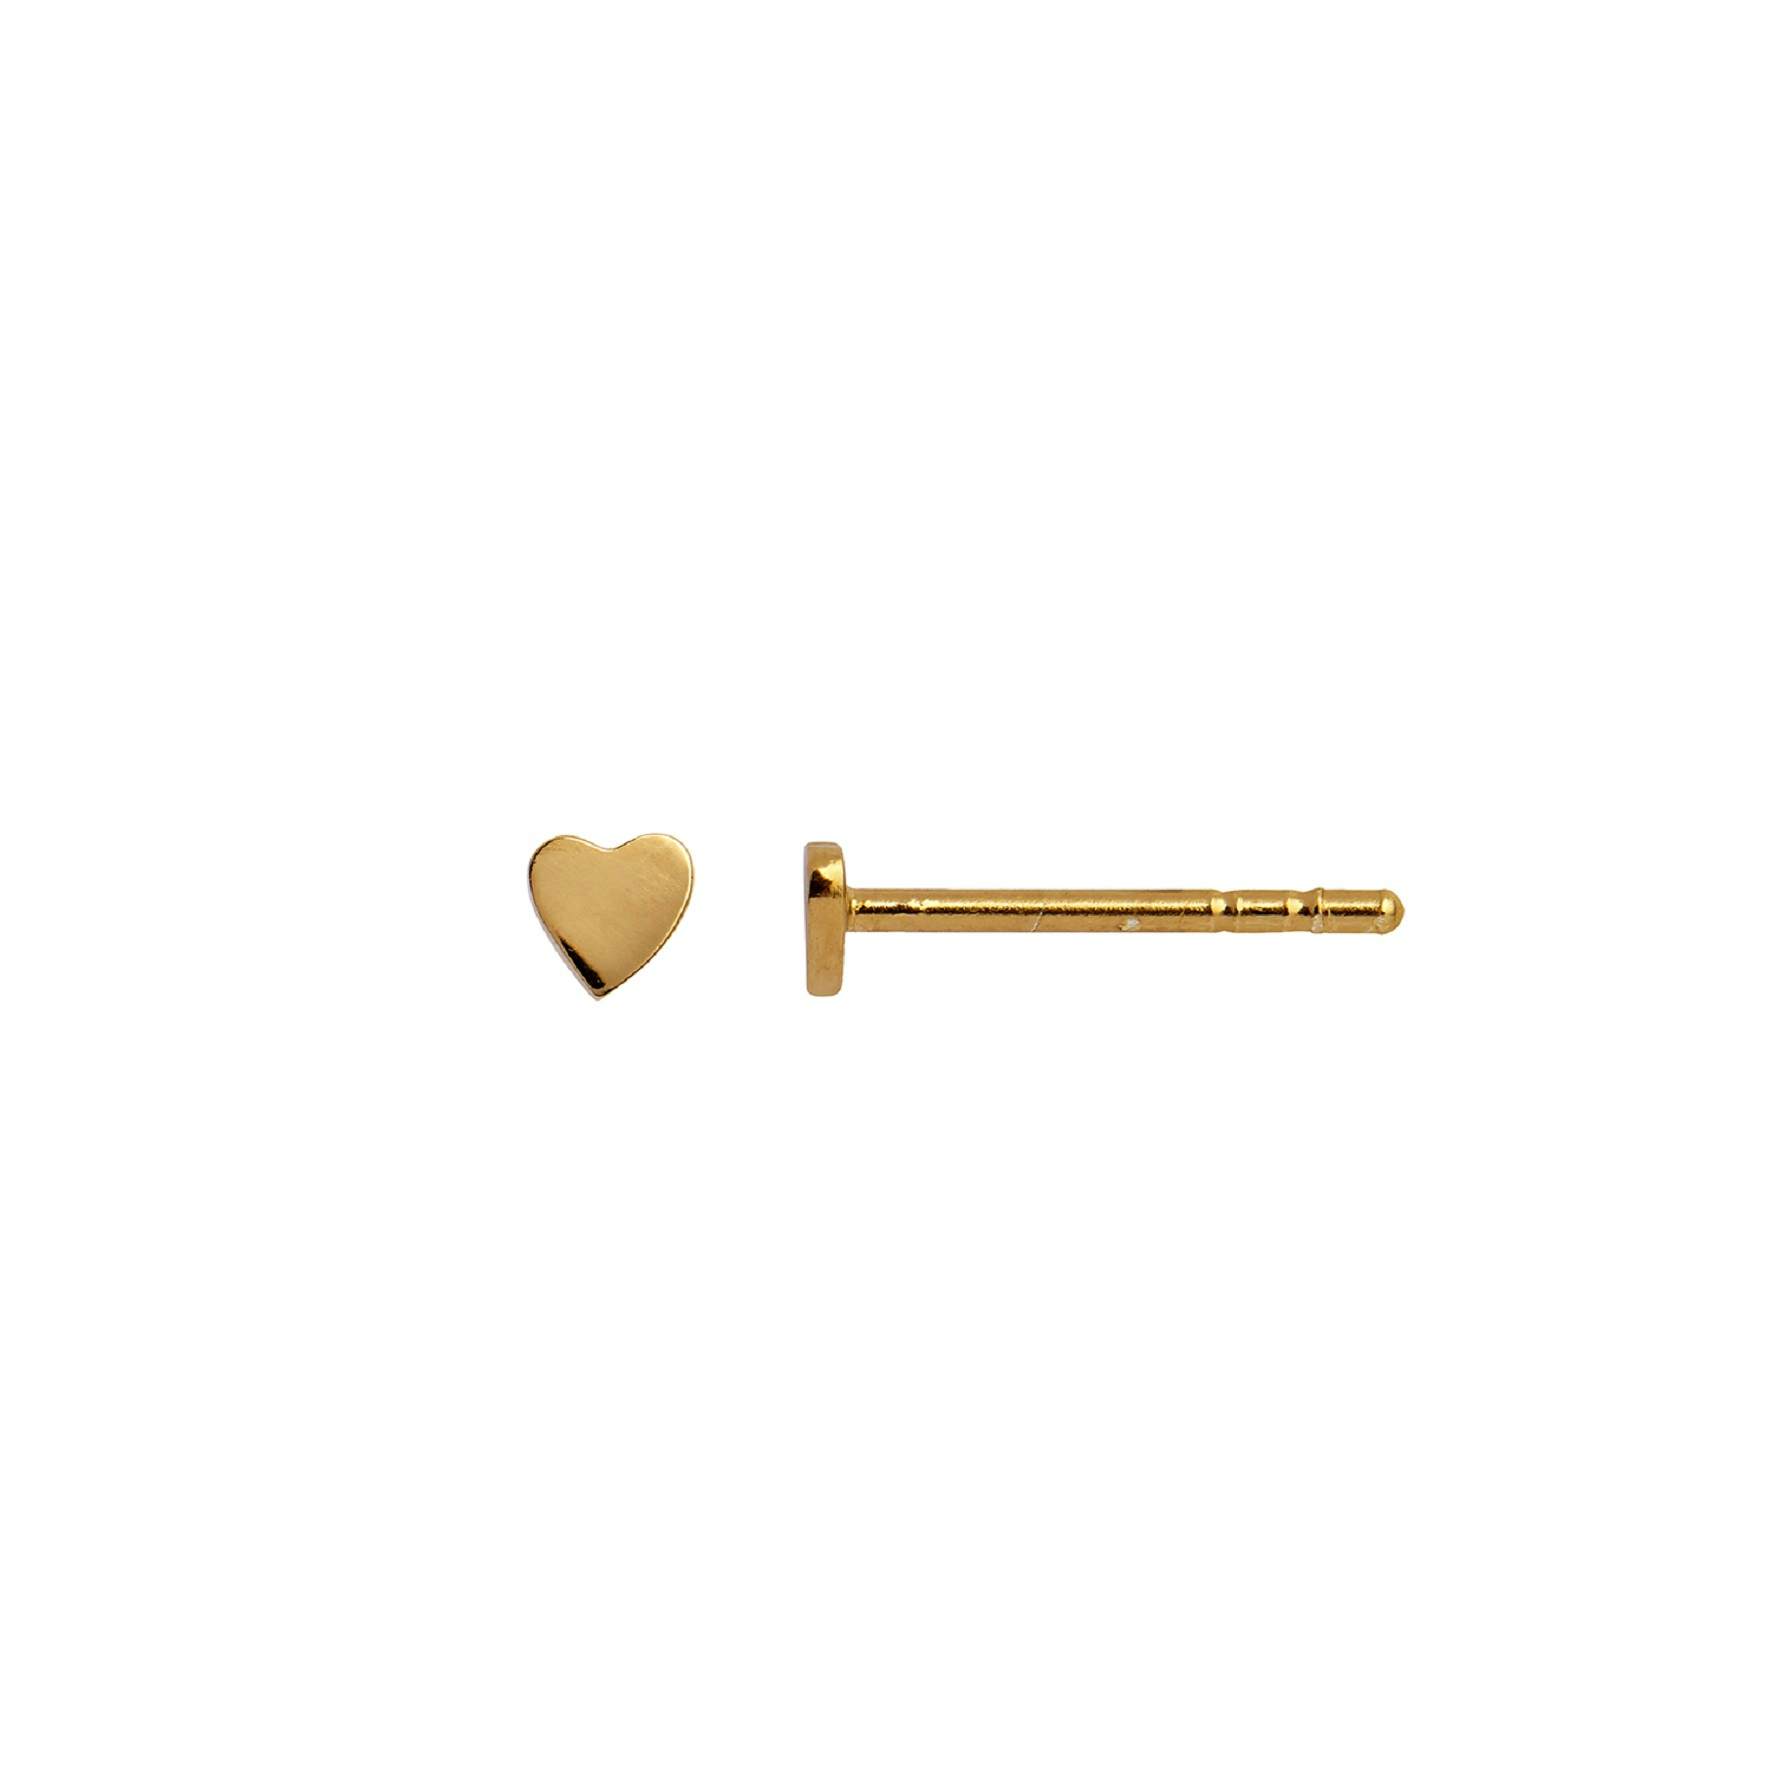 Petit Love Heart Earring von STINE A Jewelry in Vergoldet-Silber Sterling 925